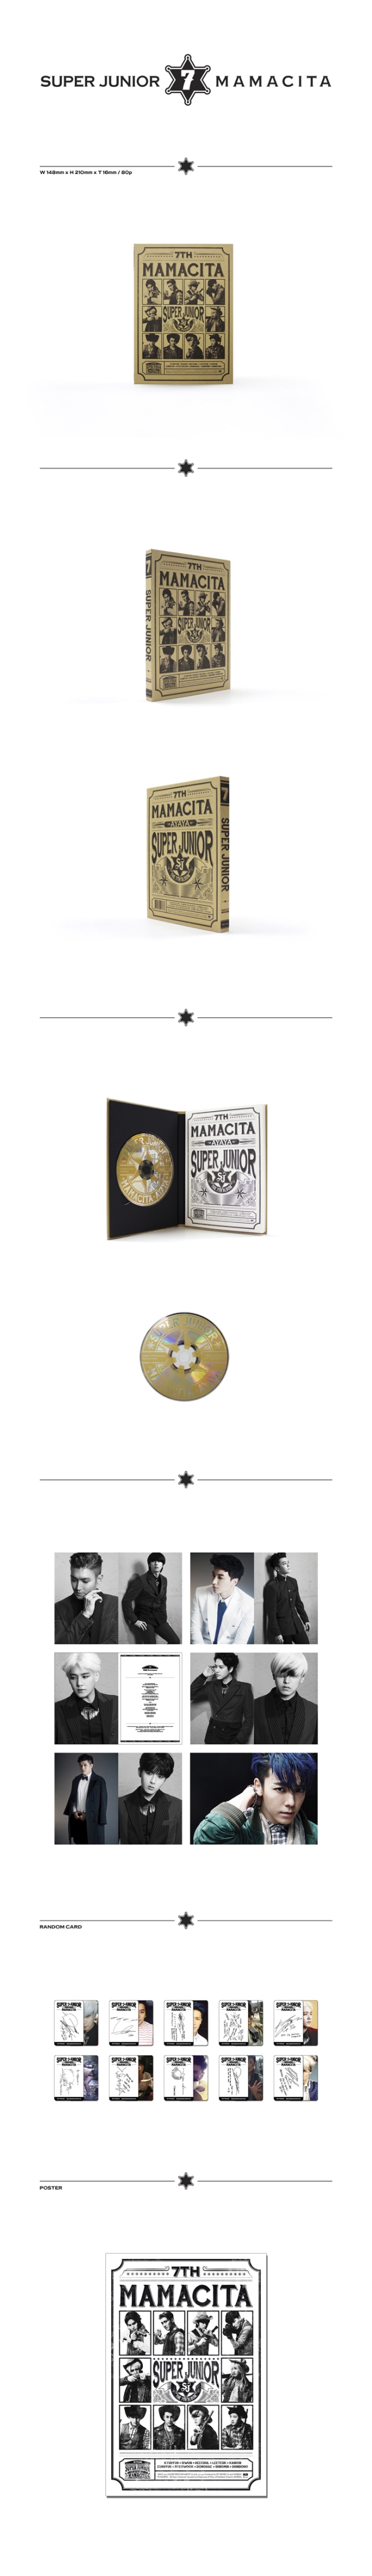 140903 mamacita b version